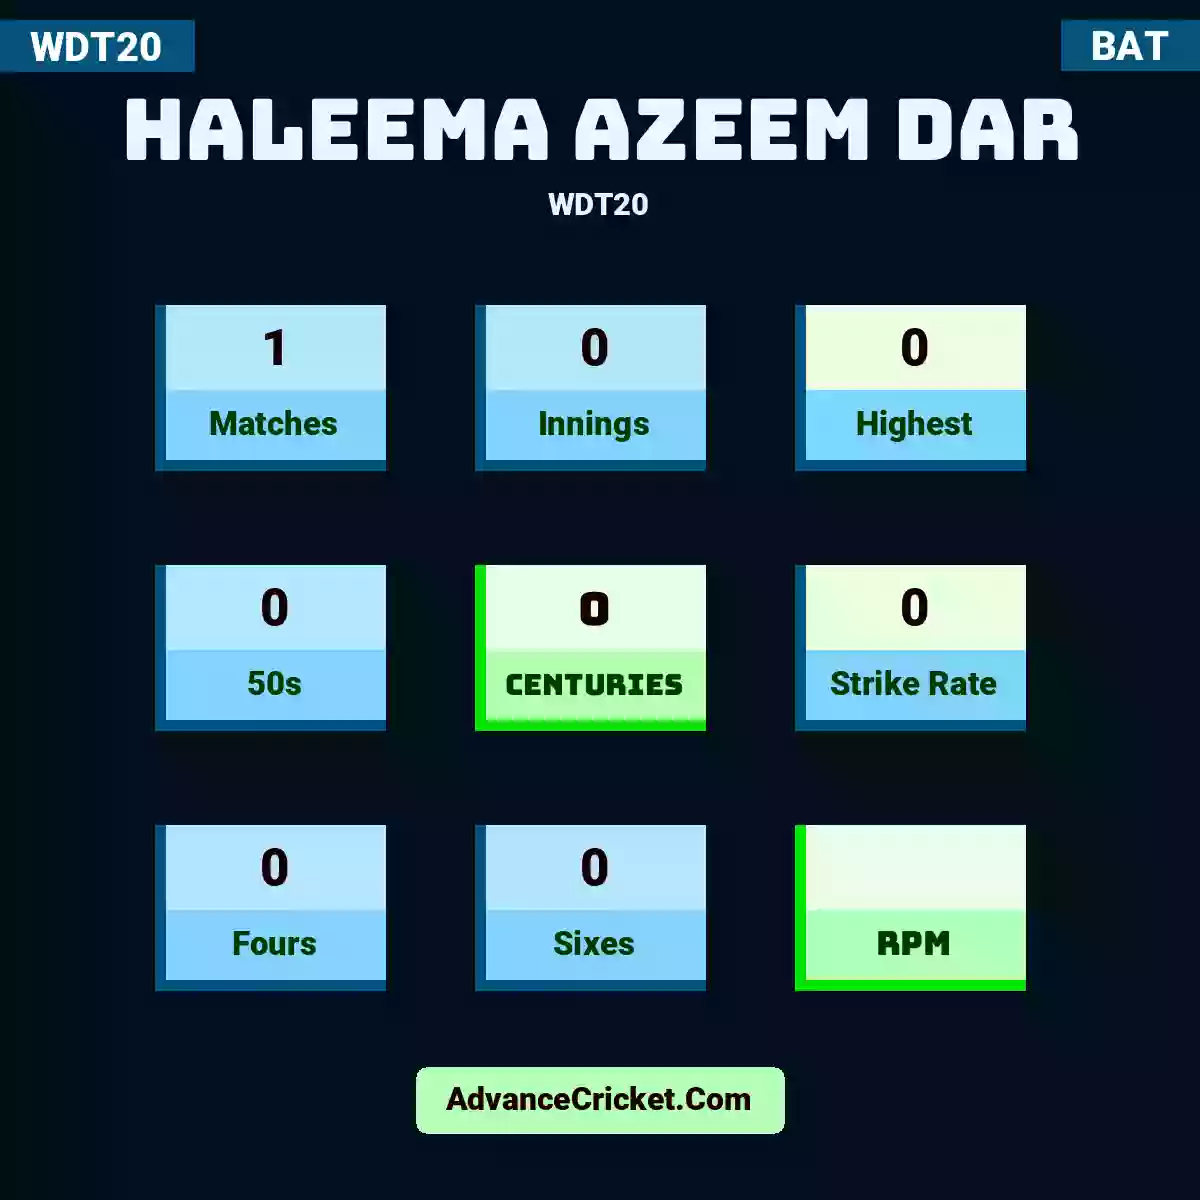 Haleema Azeem Dar WDT20 , Haleema Azeem Dar played 1 matches, scored 0 runs as highest, 0 half-centuries, and 0 centuries, with a strike rate of 0. H.Azeem.Dar hit 0 fours and 0 sixes.